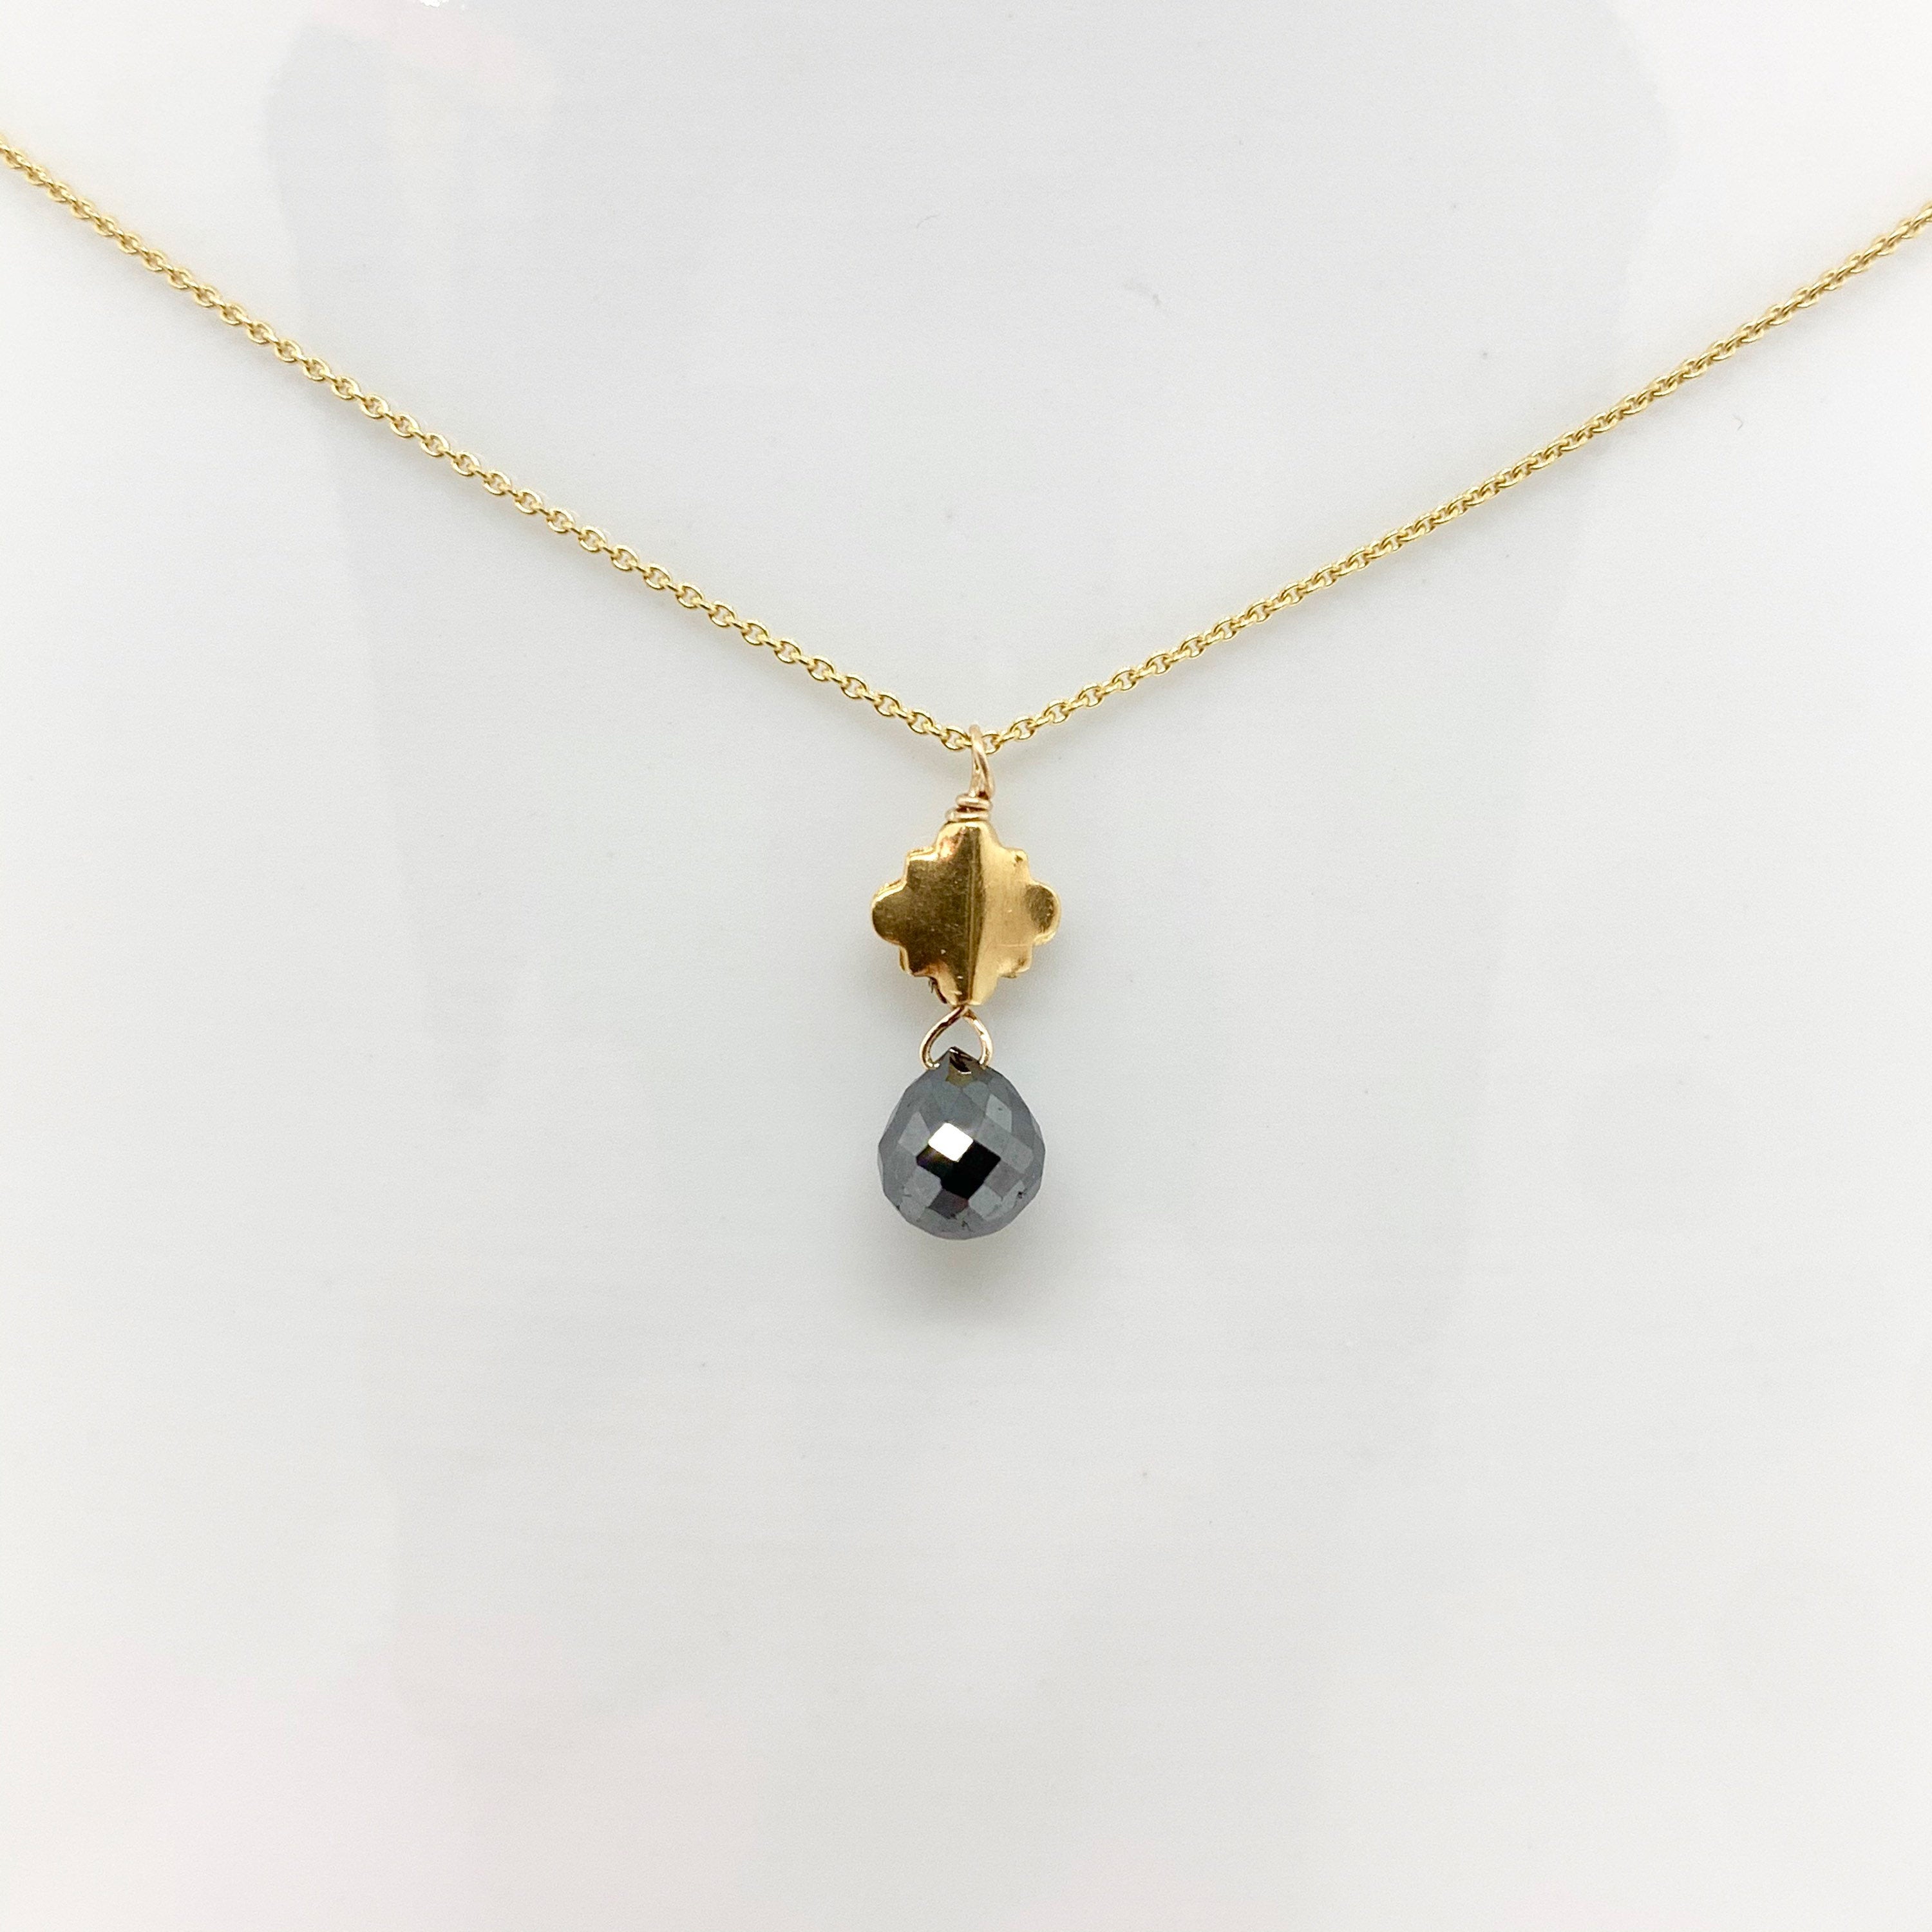 14k Gold Chain Necklace w/ Black Diamond & 18k Gold Pendant